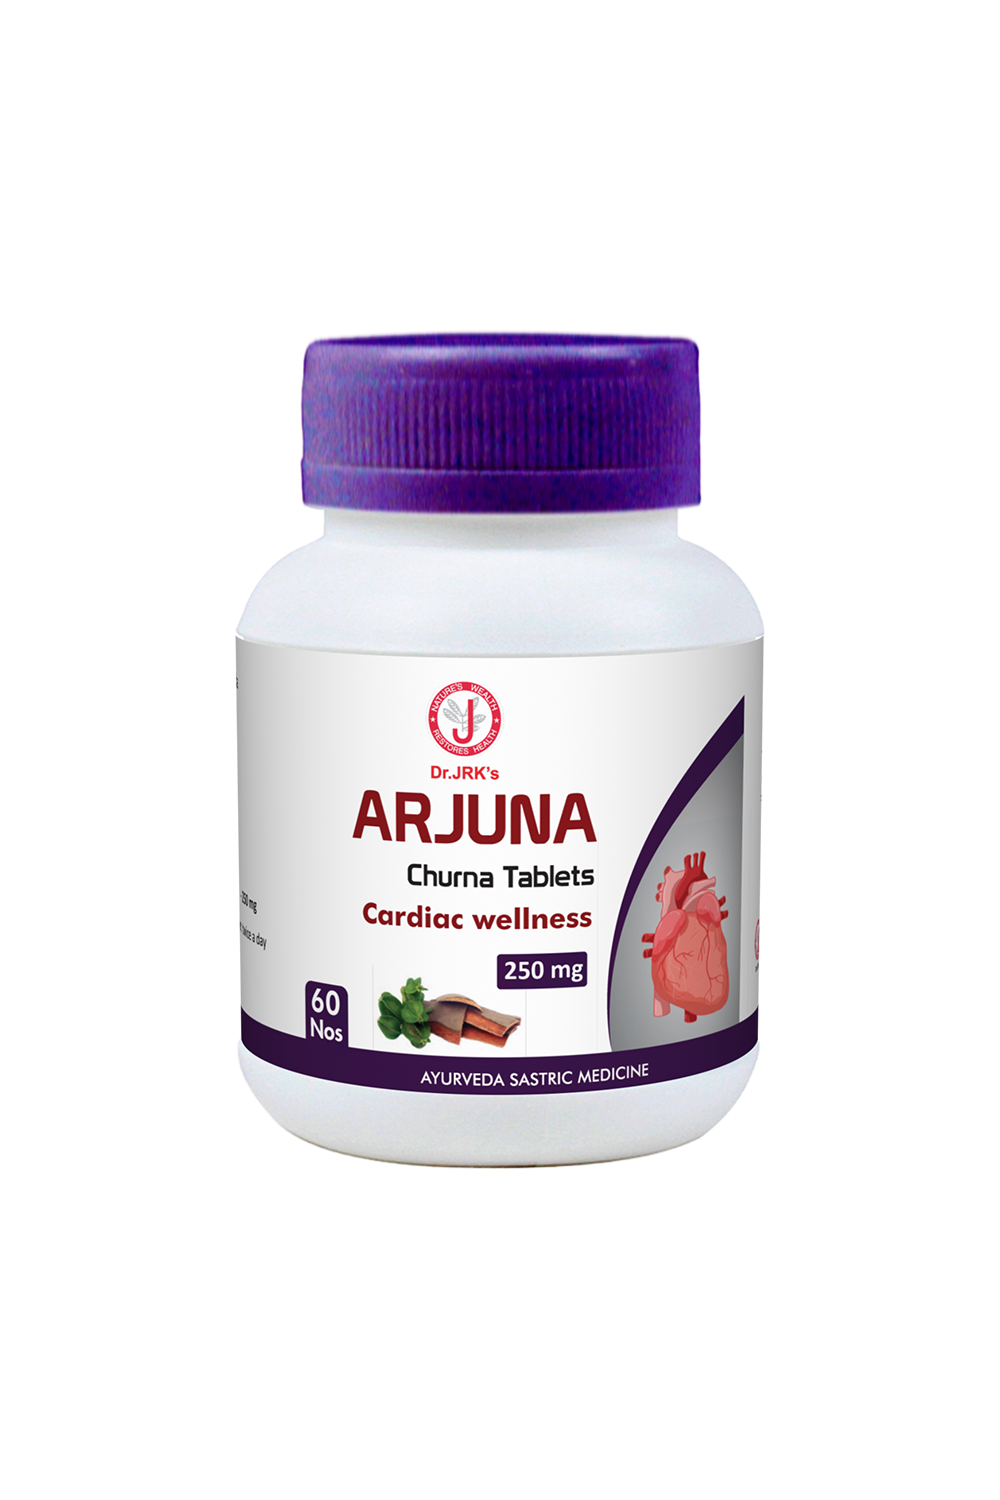 Dr. JRK's Arjuna Churna Tablets